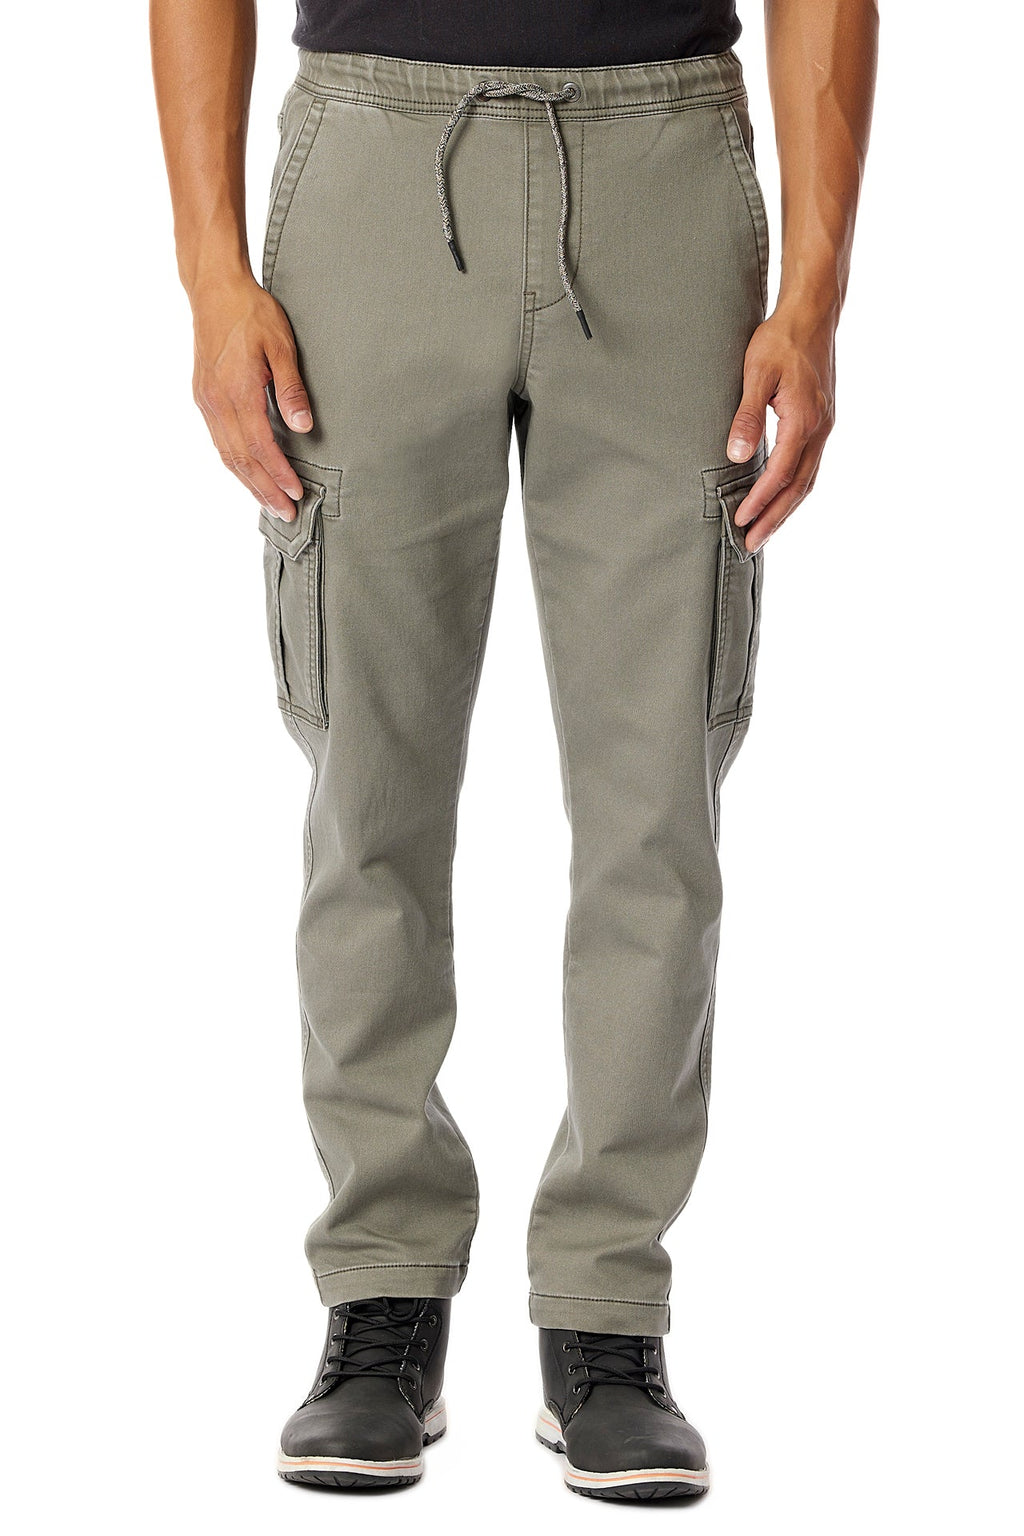 Cargo Pants for Men - Slim, Skinny, Khaki & More